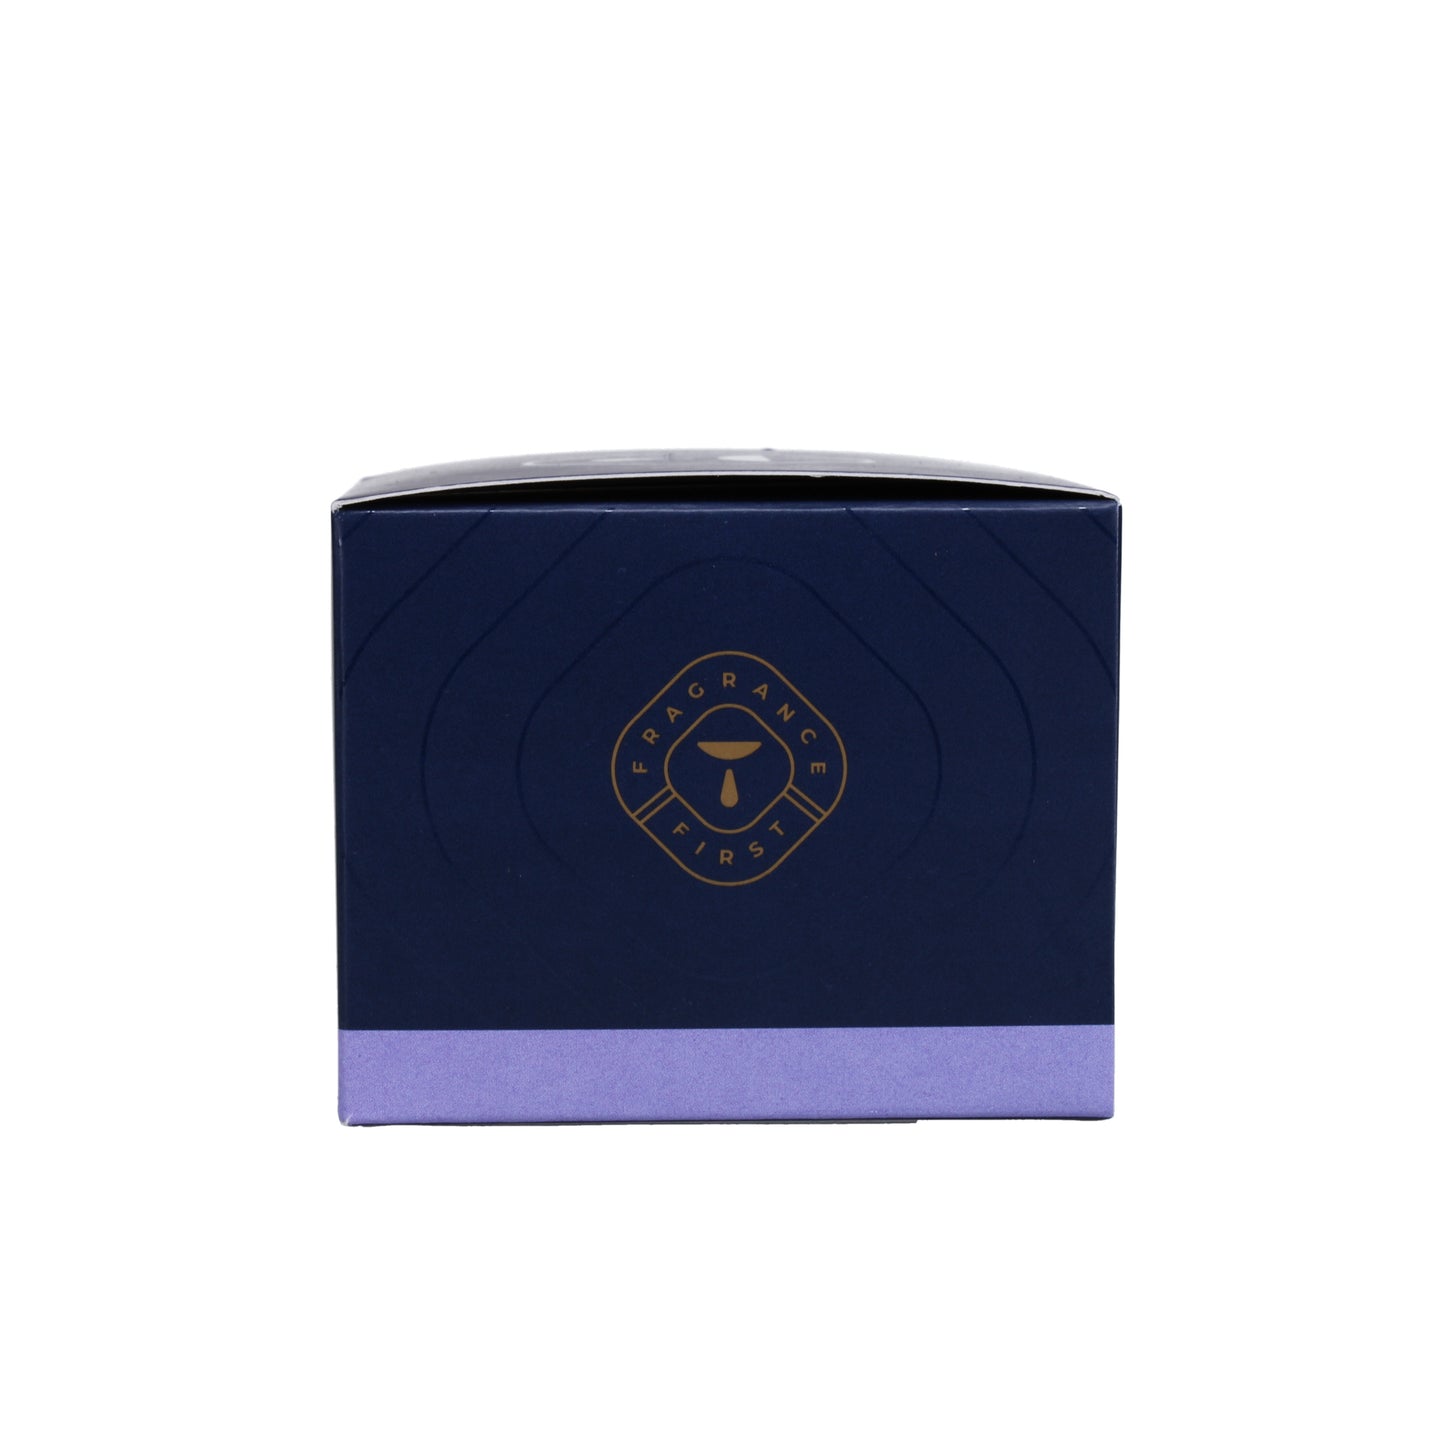 No. 25 Lavender de Provence 3.75 oz. Small Poured Candle Image 4